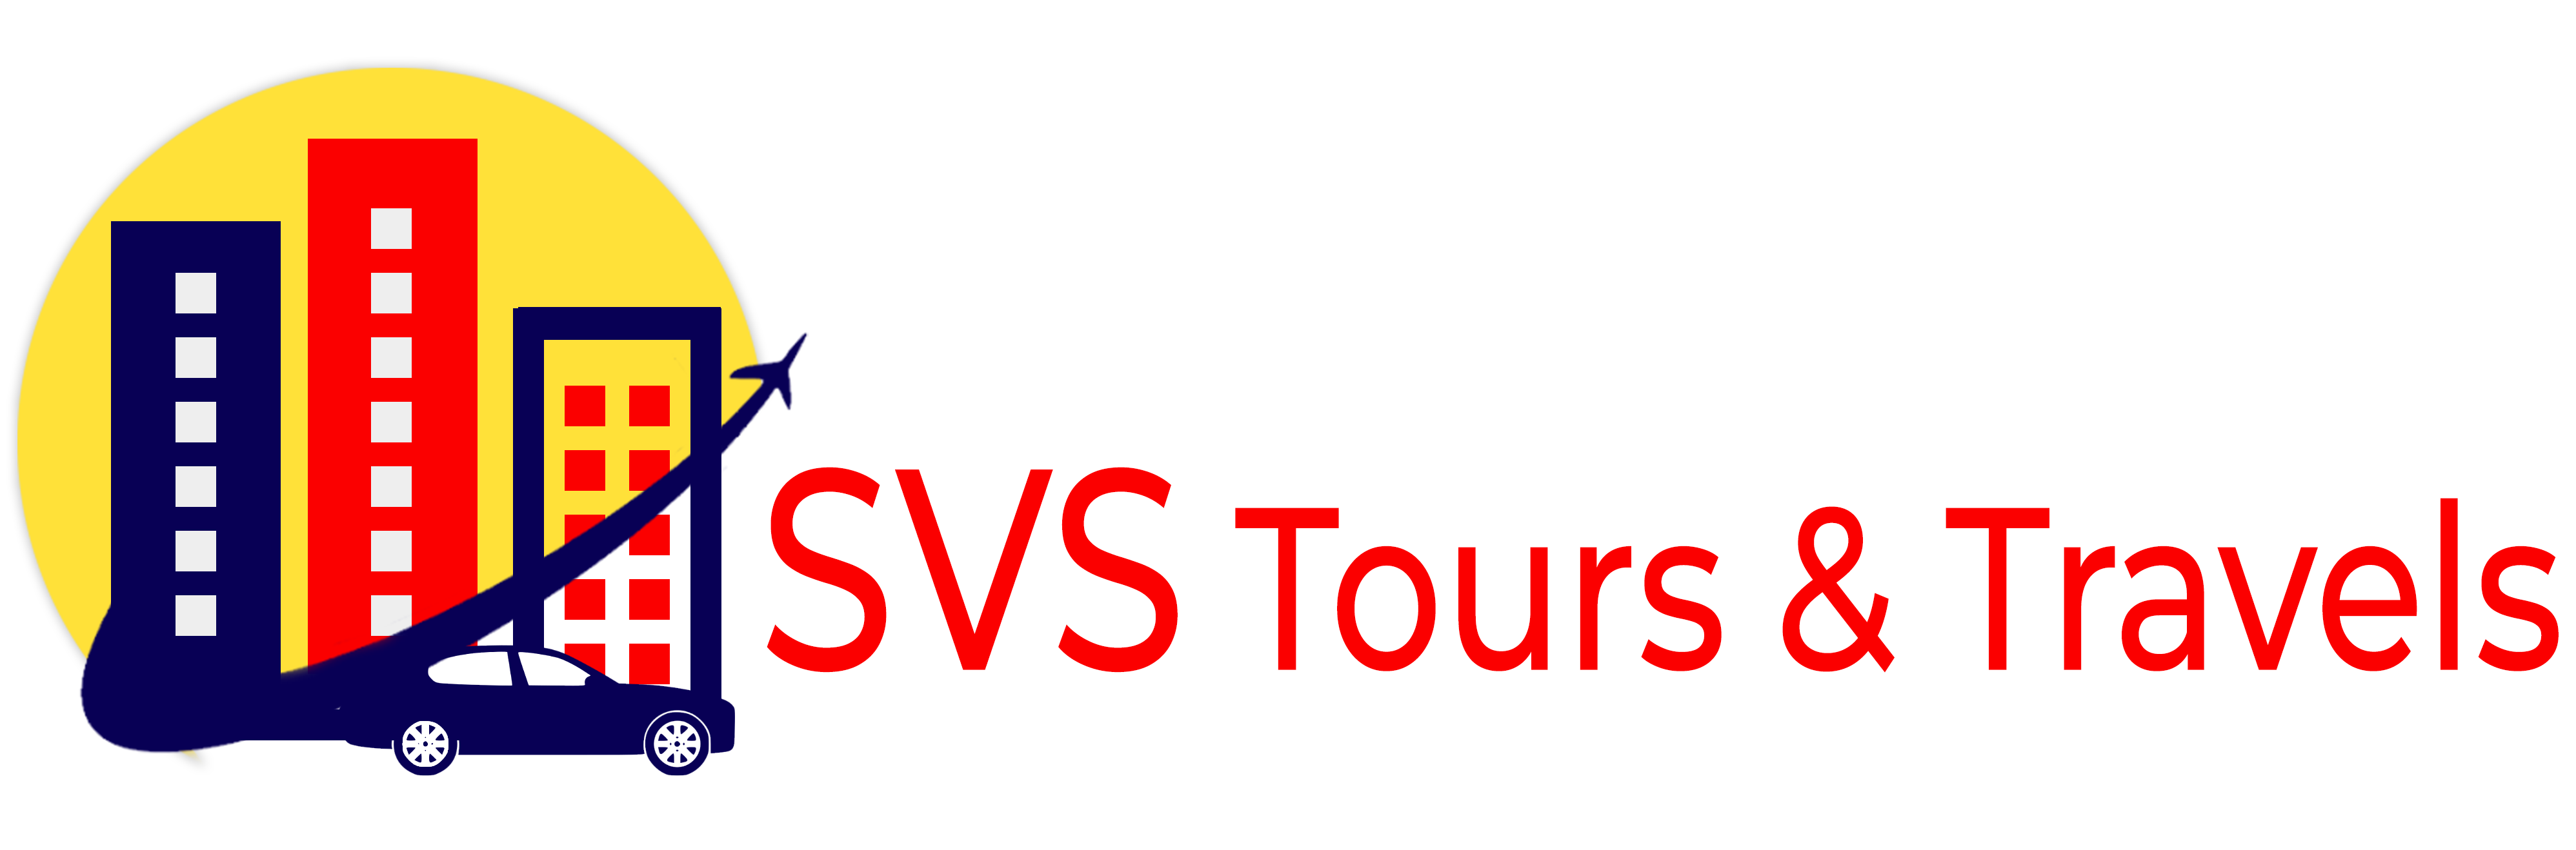 SVS Tours & Travels